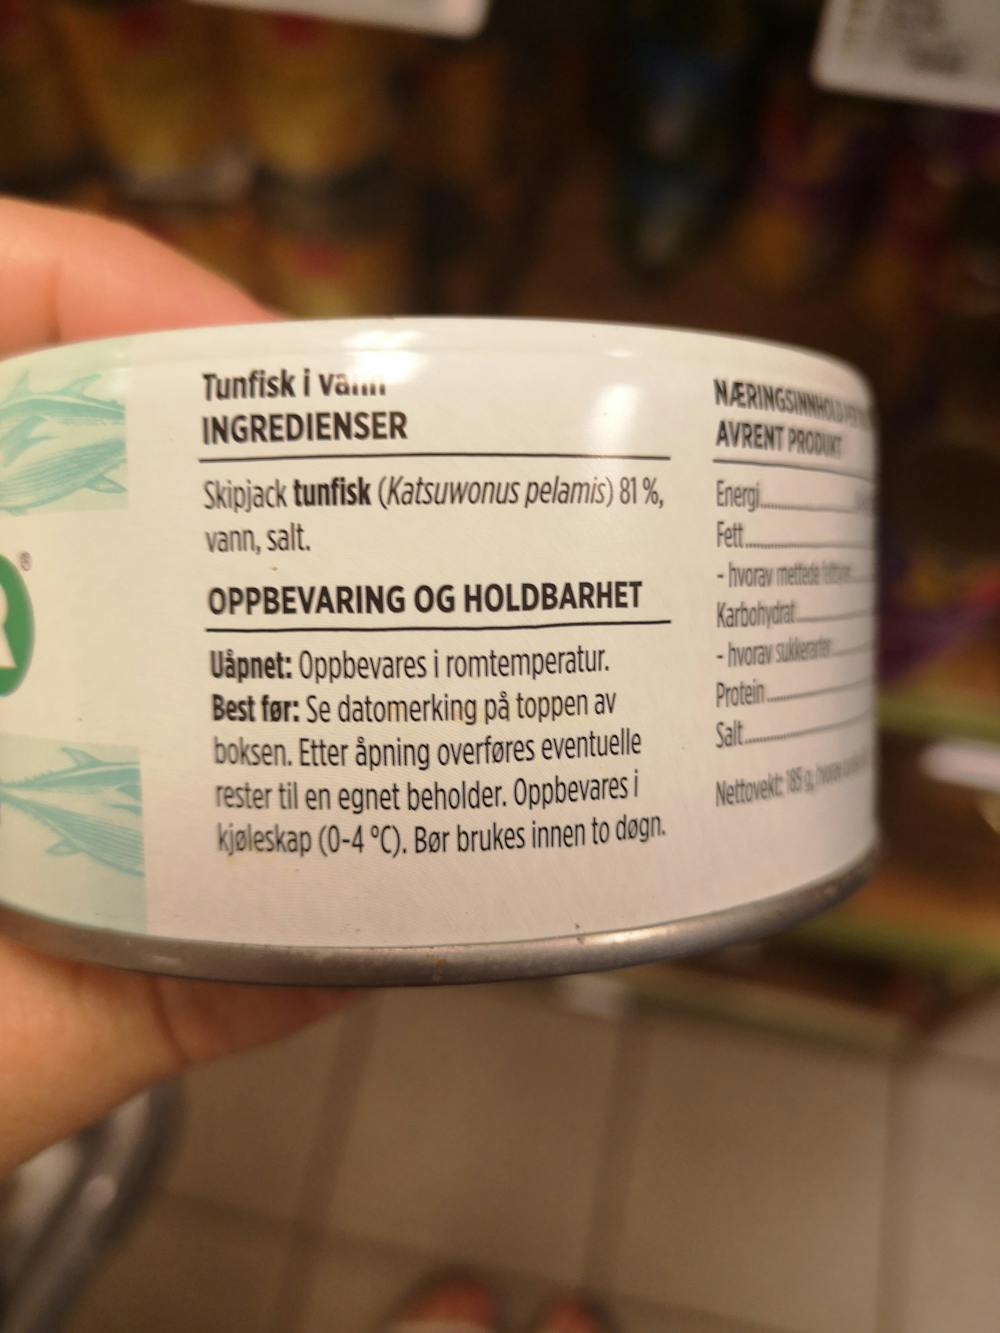 Ingredienslisten til Tunfisk i vann, Eldorado